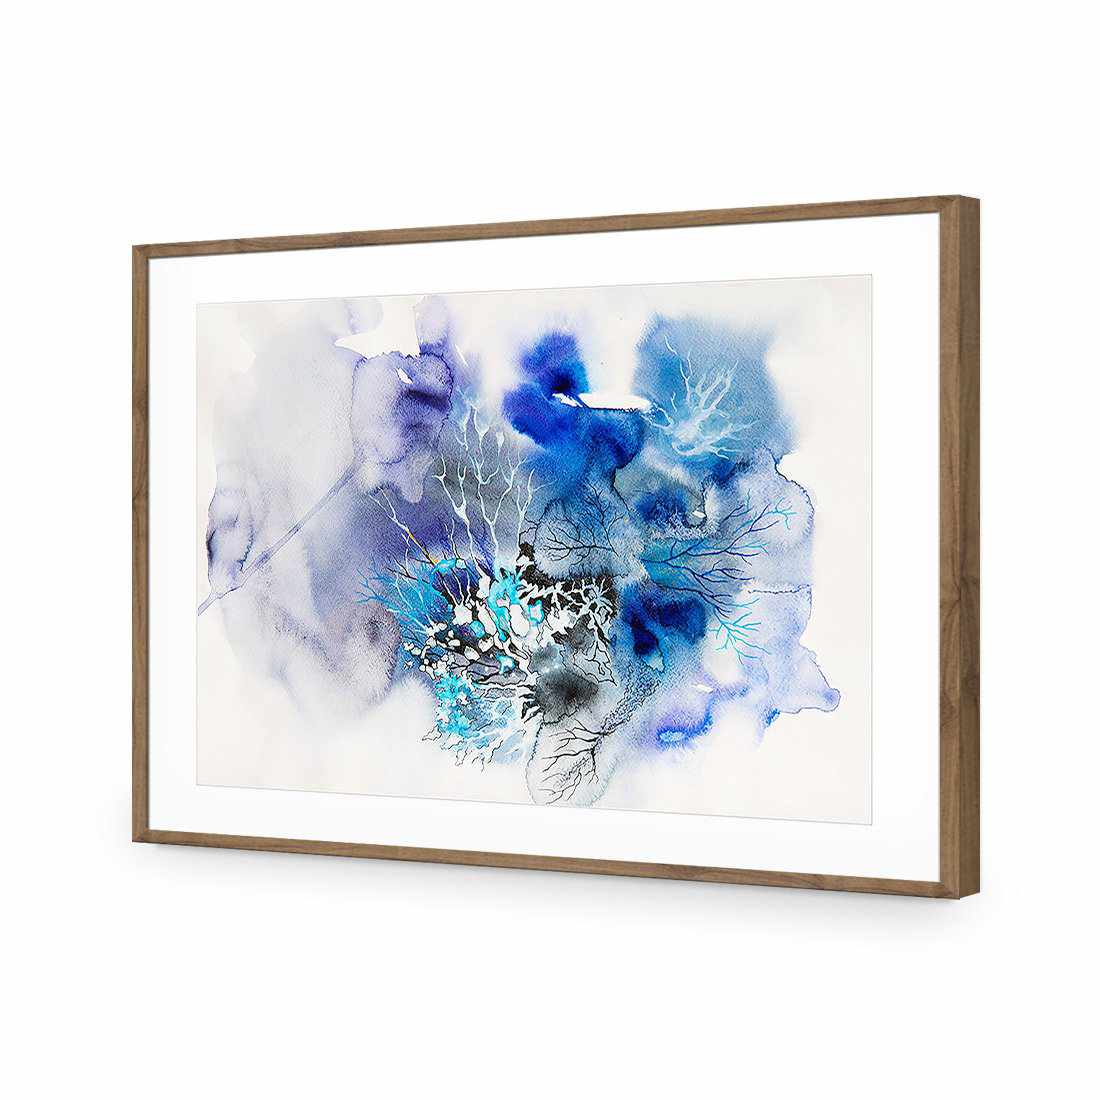 Veins Of Life, Blue-Acrylic-Wall Art Design-With Border-Acrylic - Natural Frame-45x30cm-Wall Art Designs